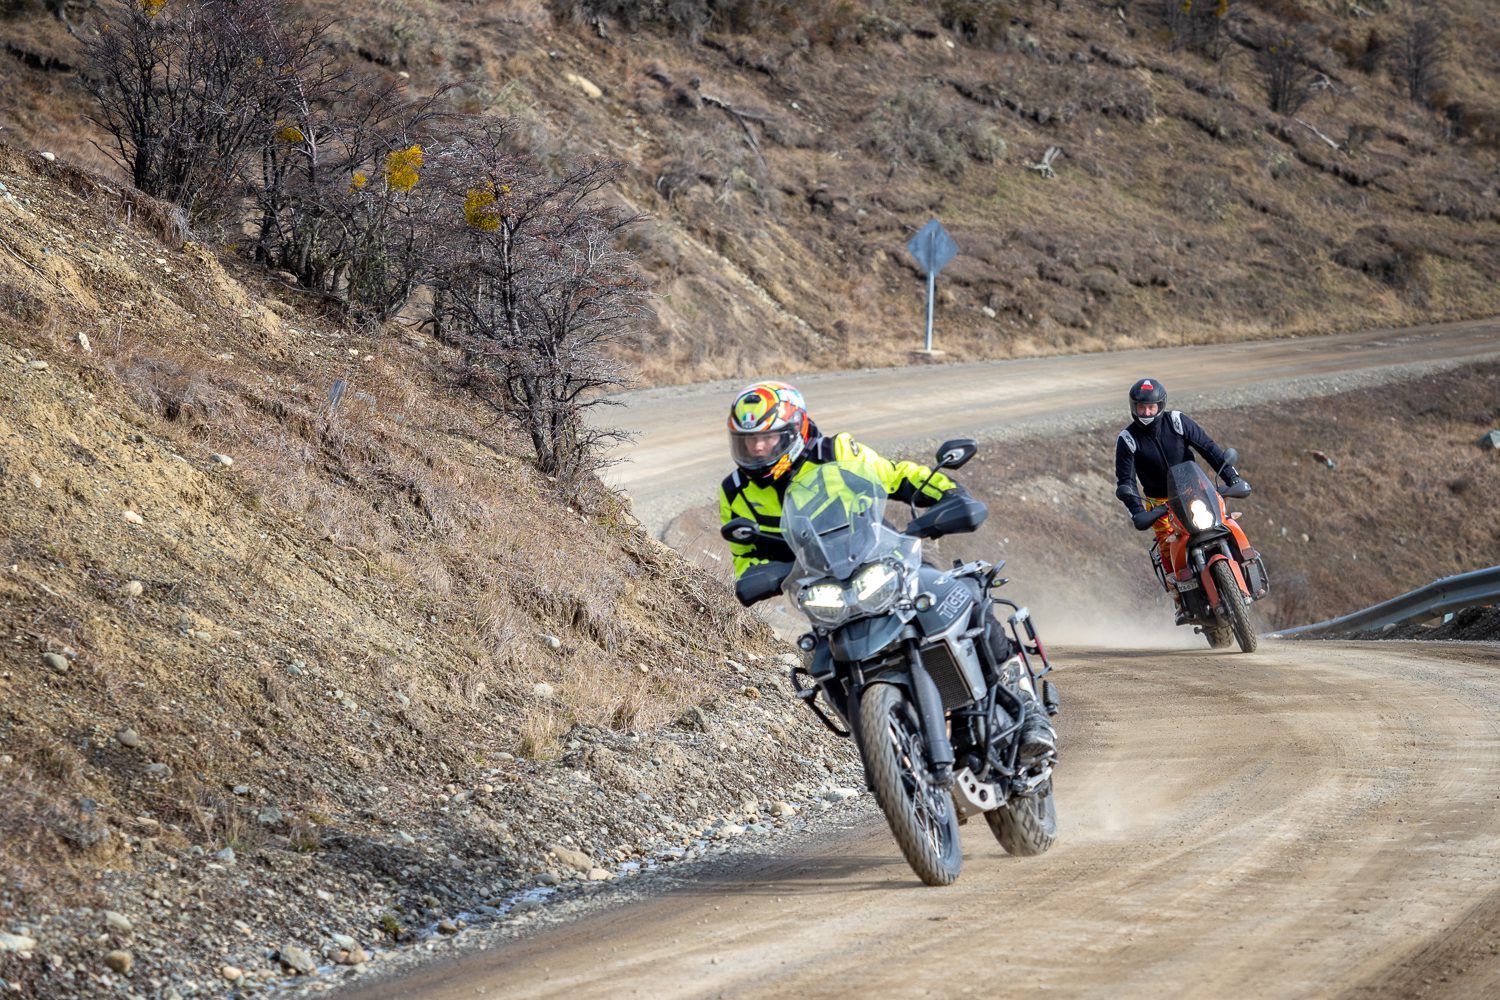 Patagonian Riders - Patagonia Motorcycles Adventure - Trail tours